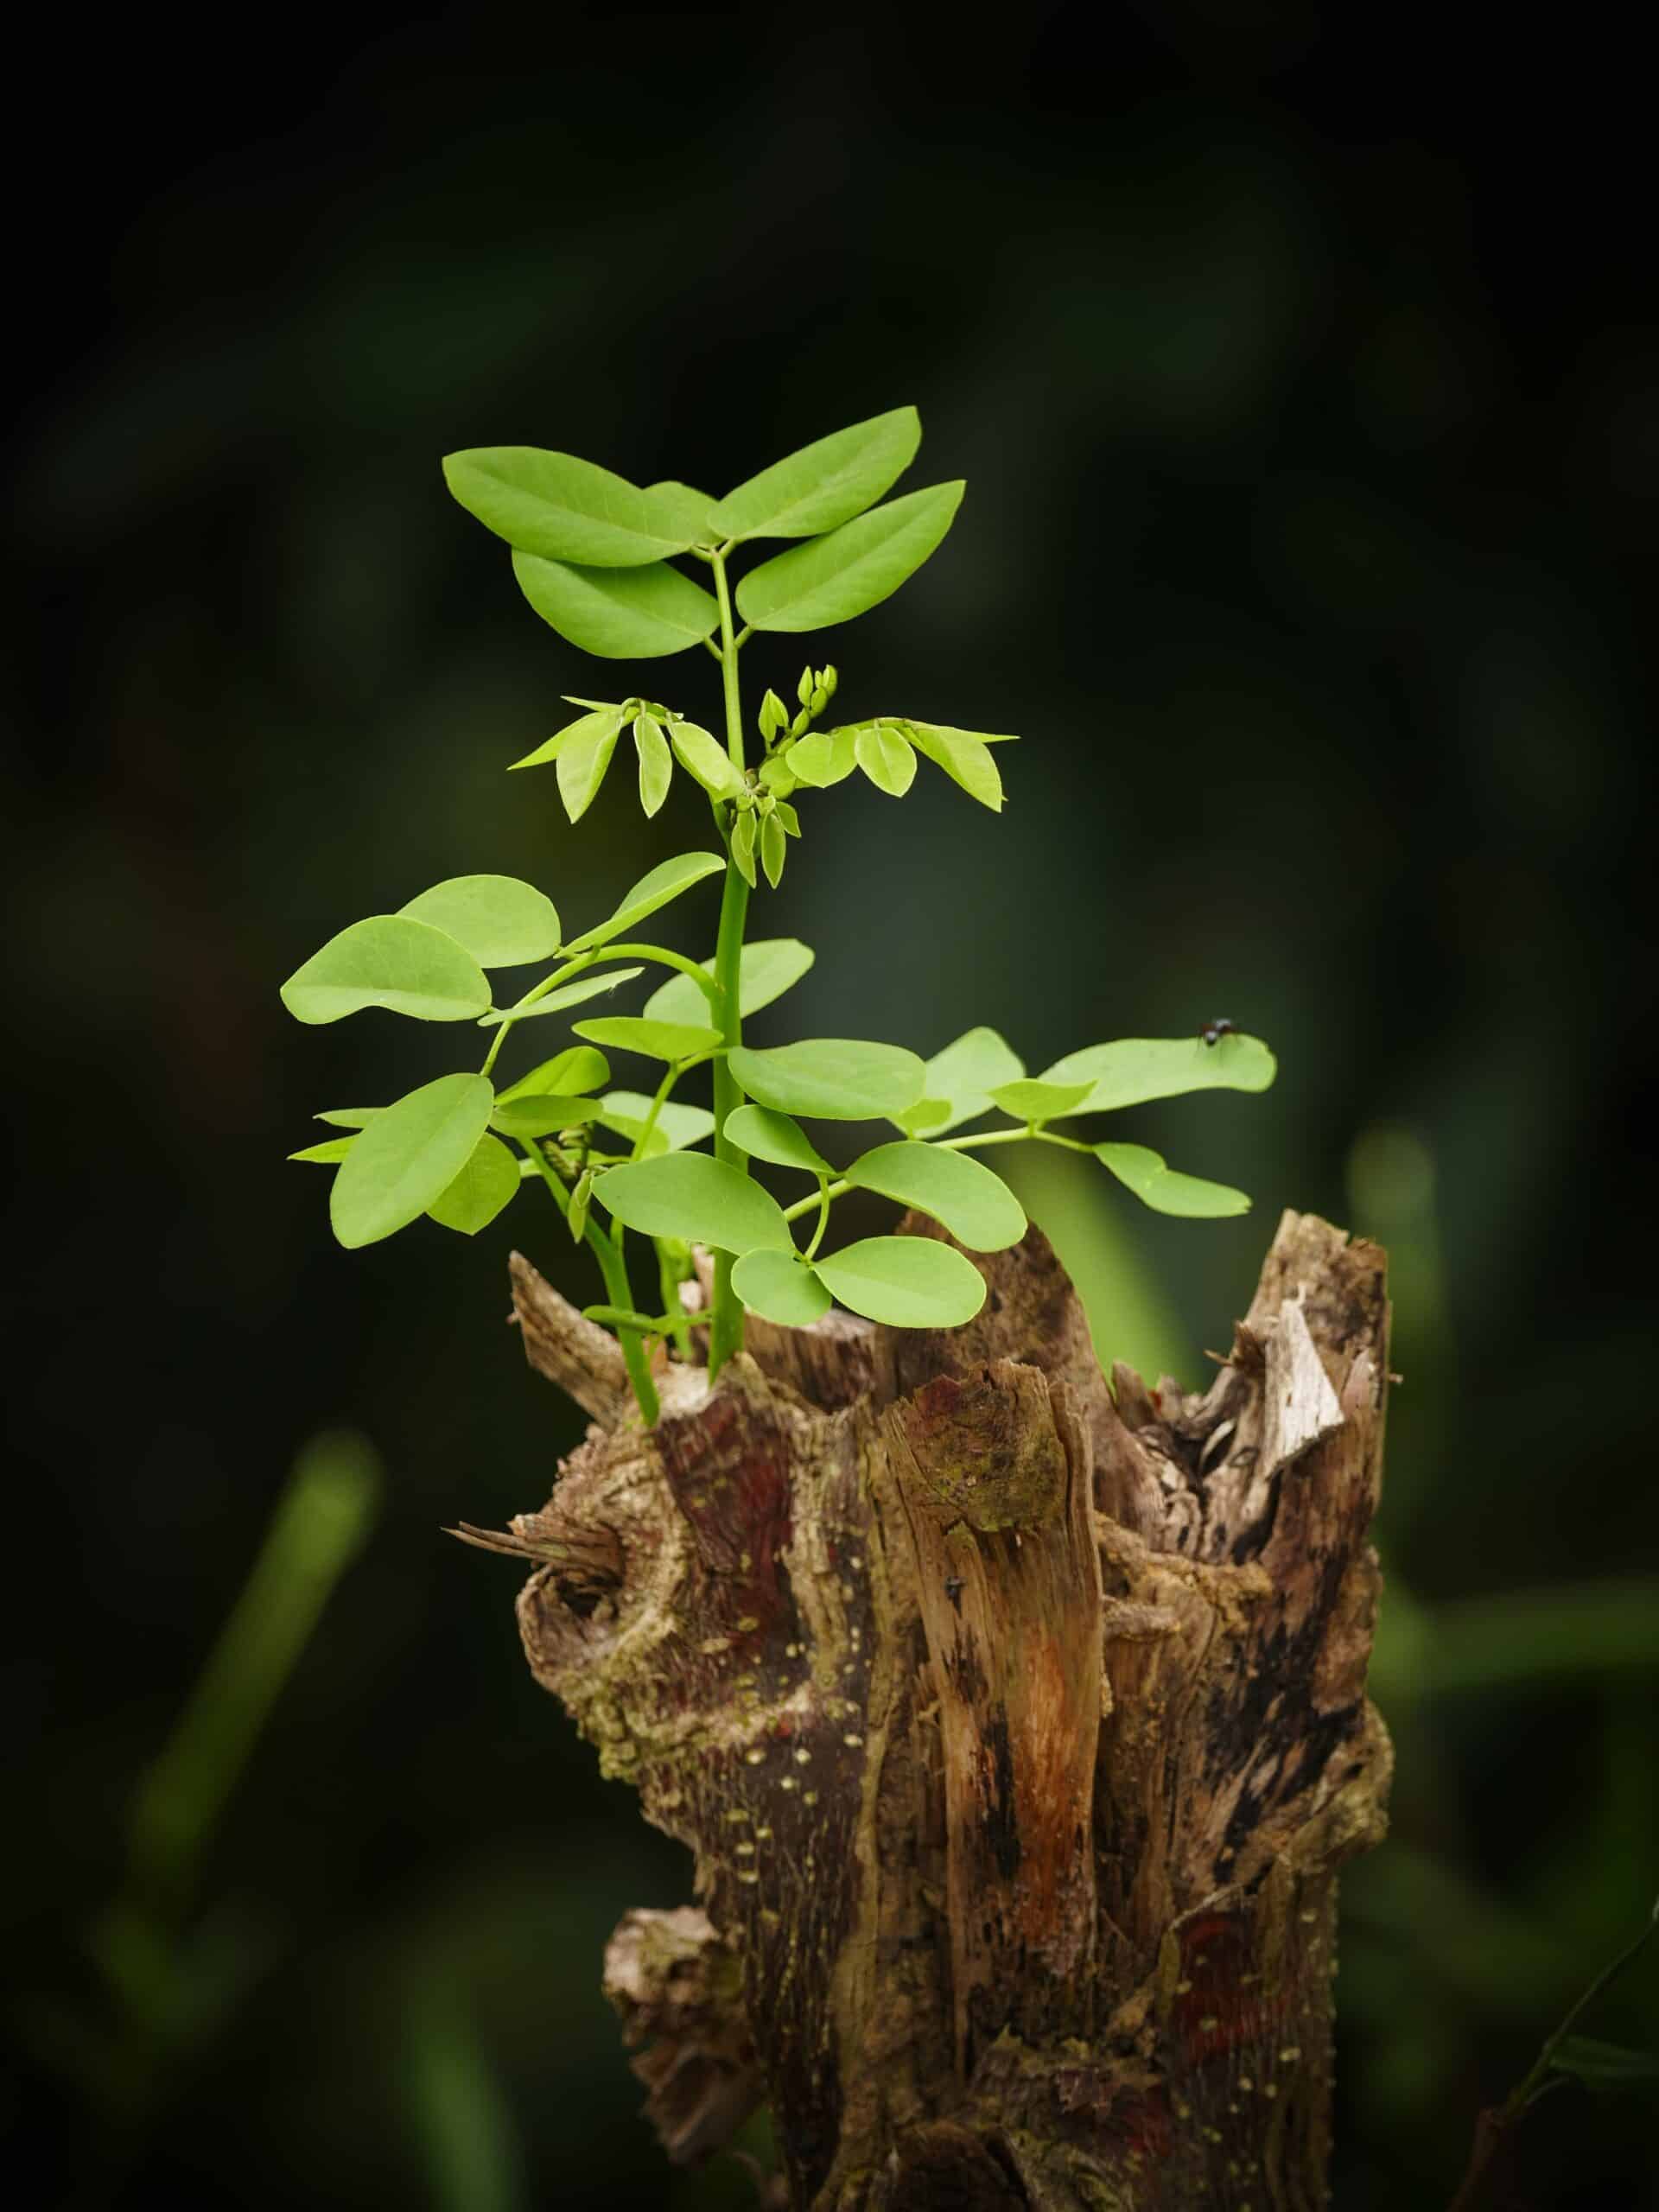 Sapling growing on a stump